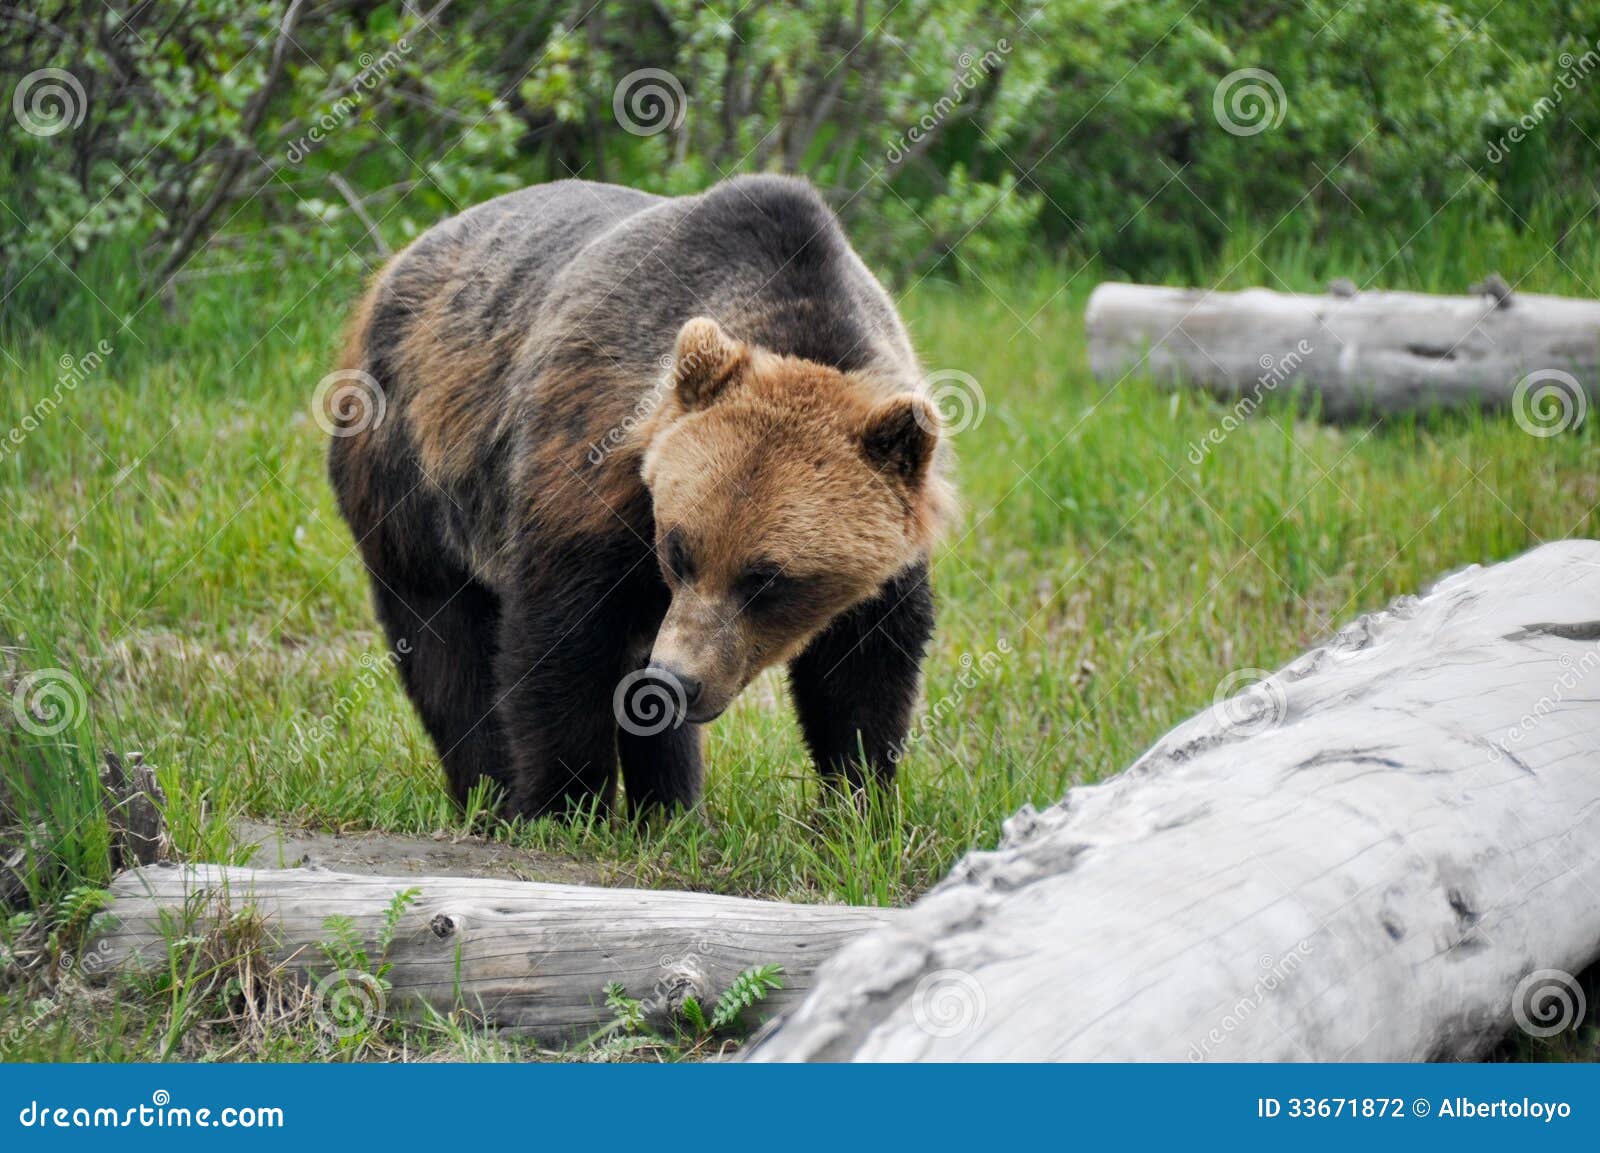 grizzly bear, alaska